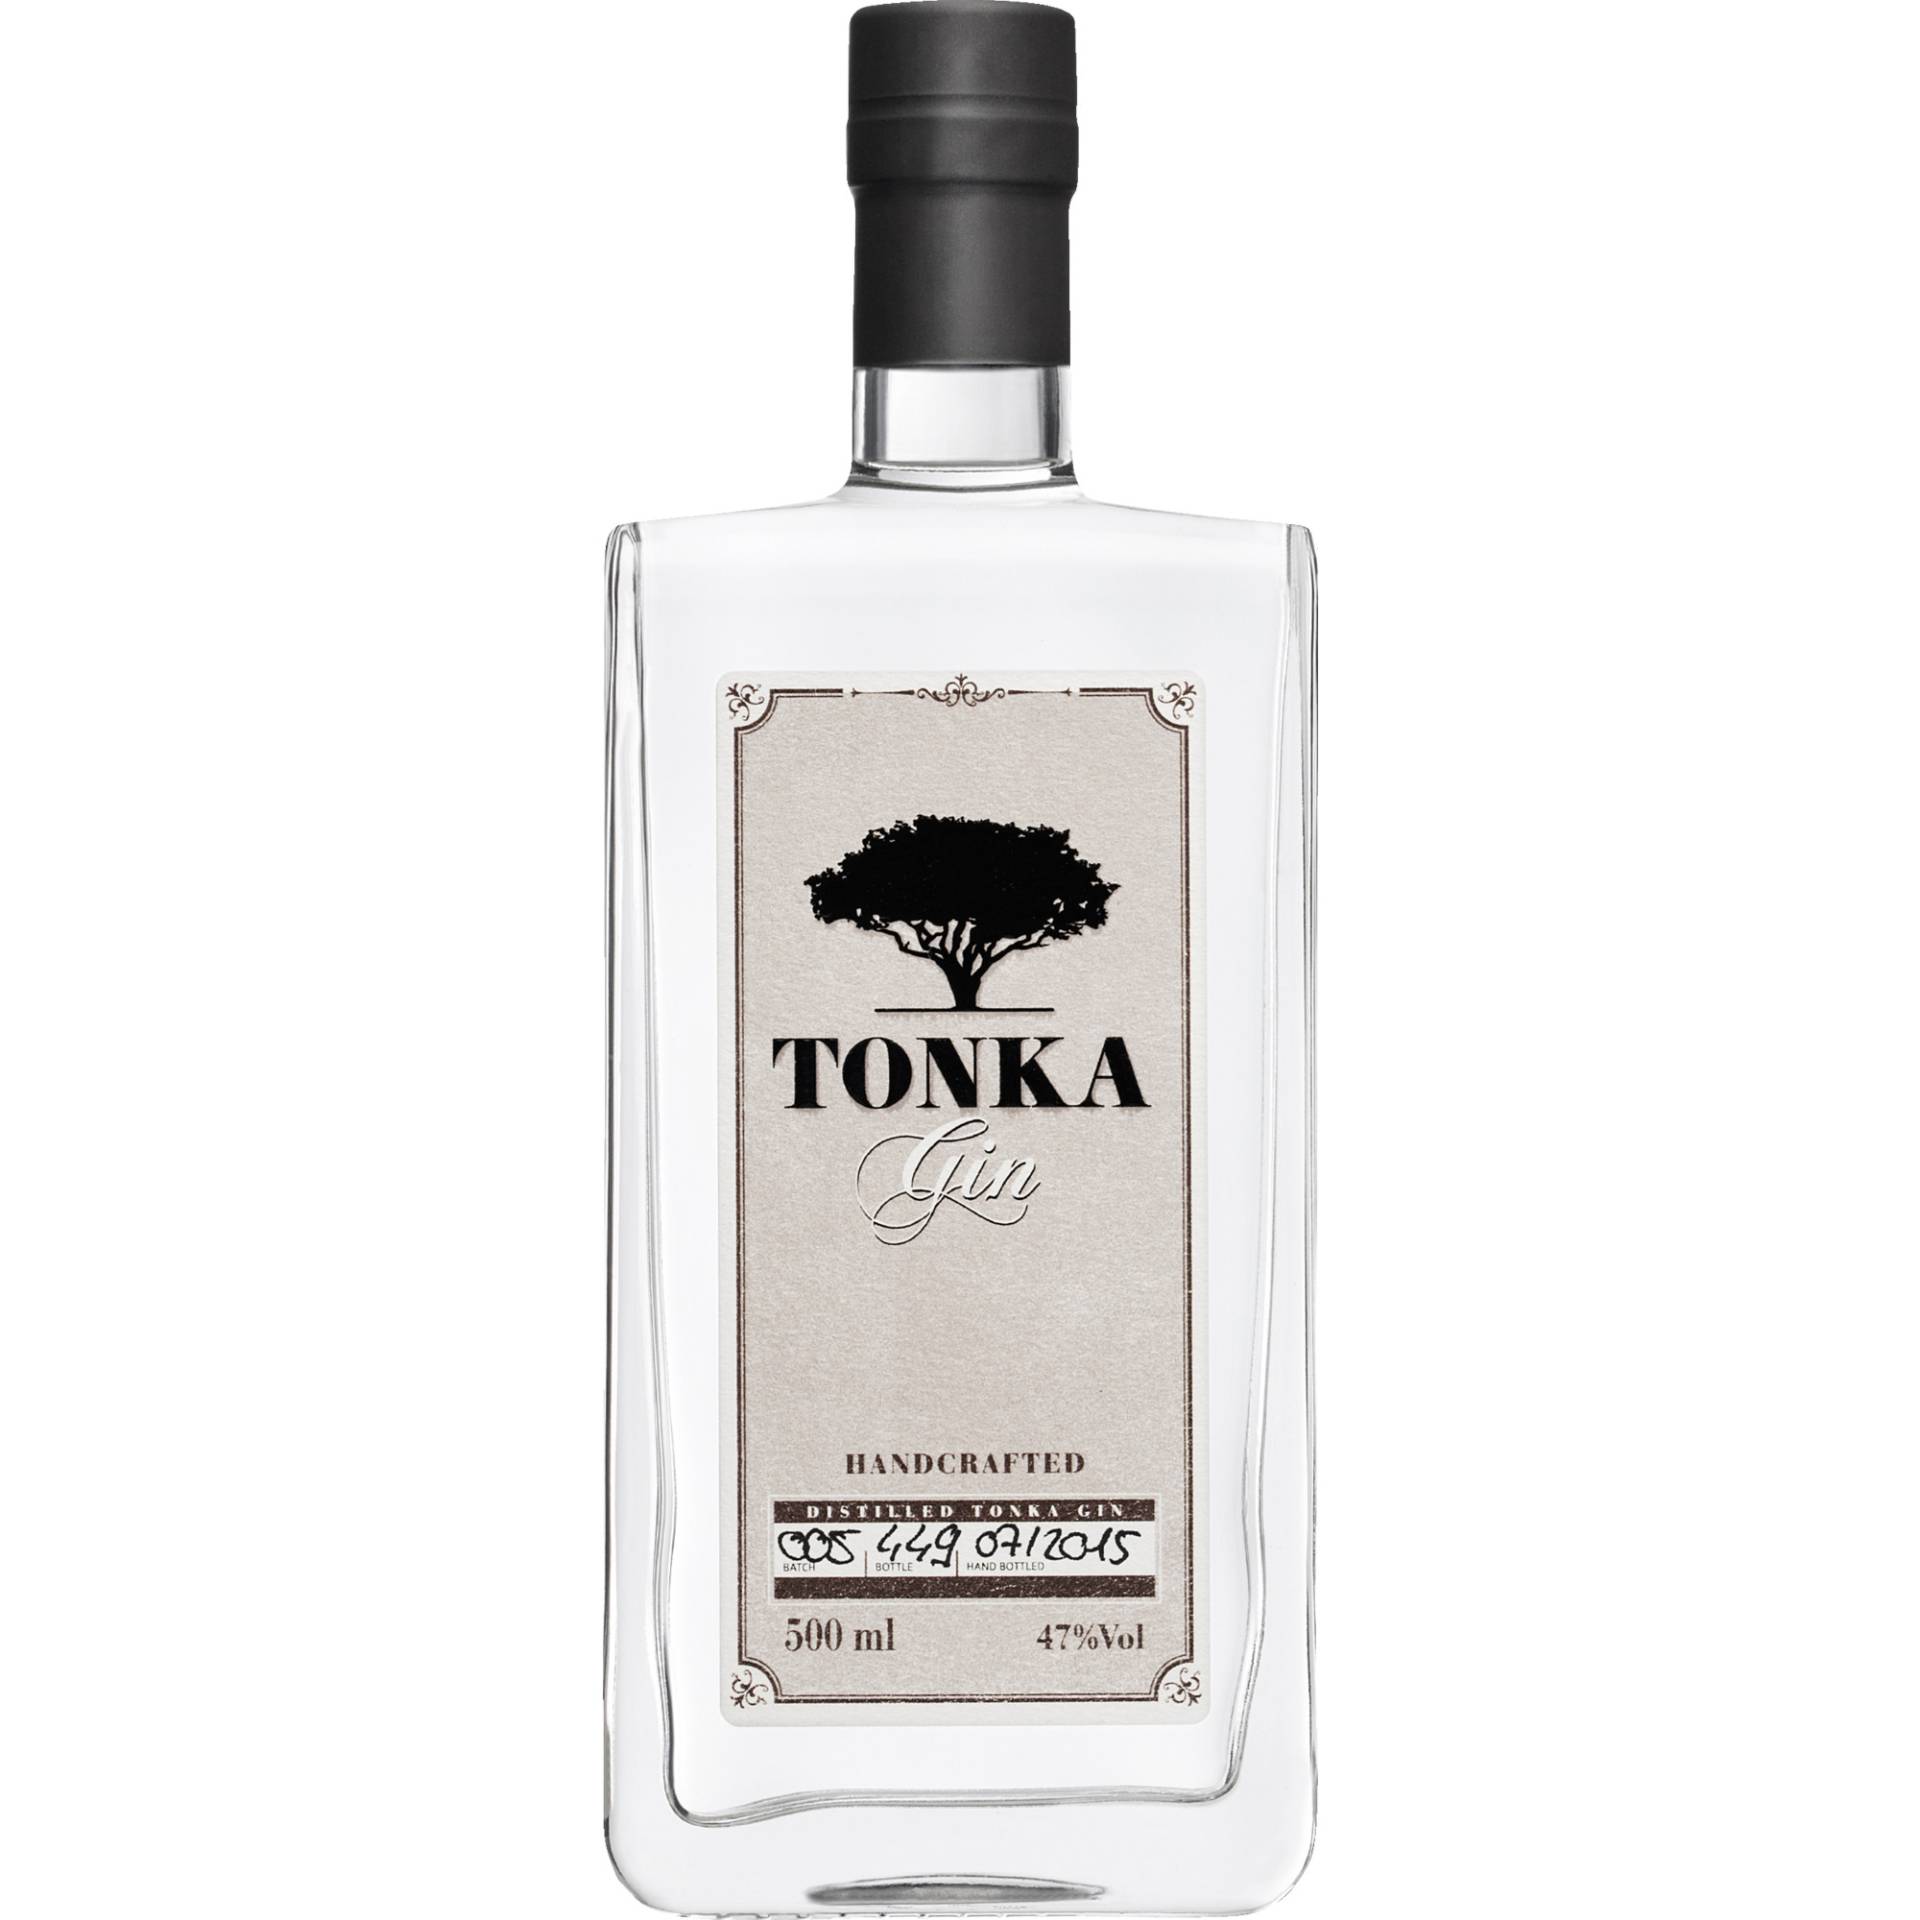 Tonka Gin, 47 % vol. 0,5 L, Spirituosen von Tonka Gin, Papenreye 18, D - 22453 Hamburg